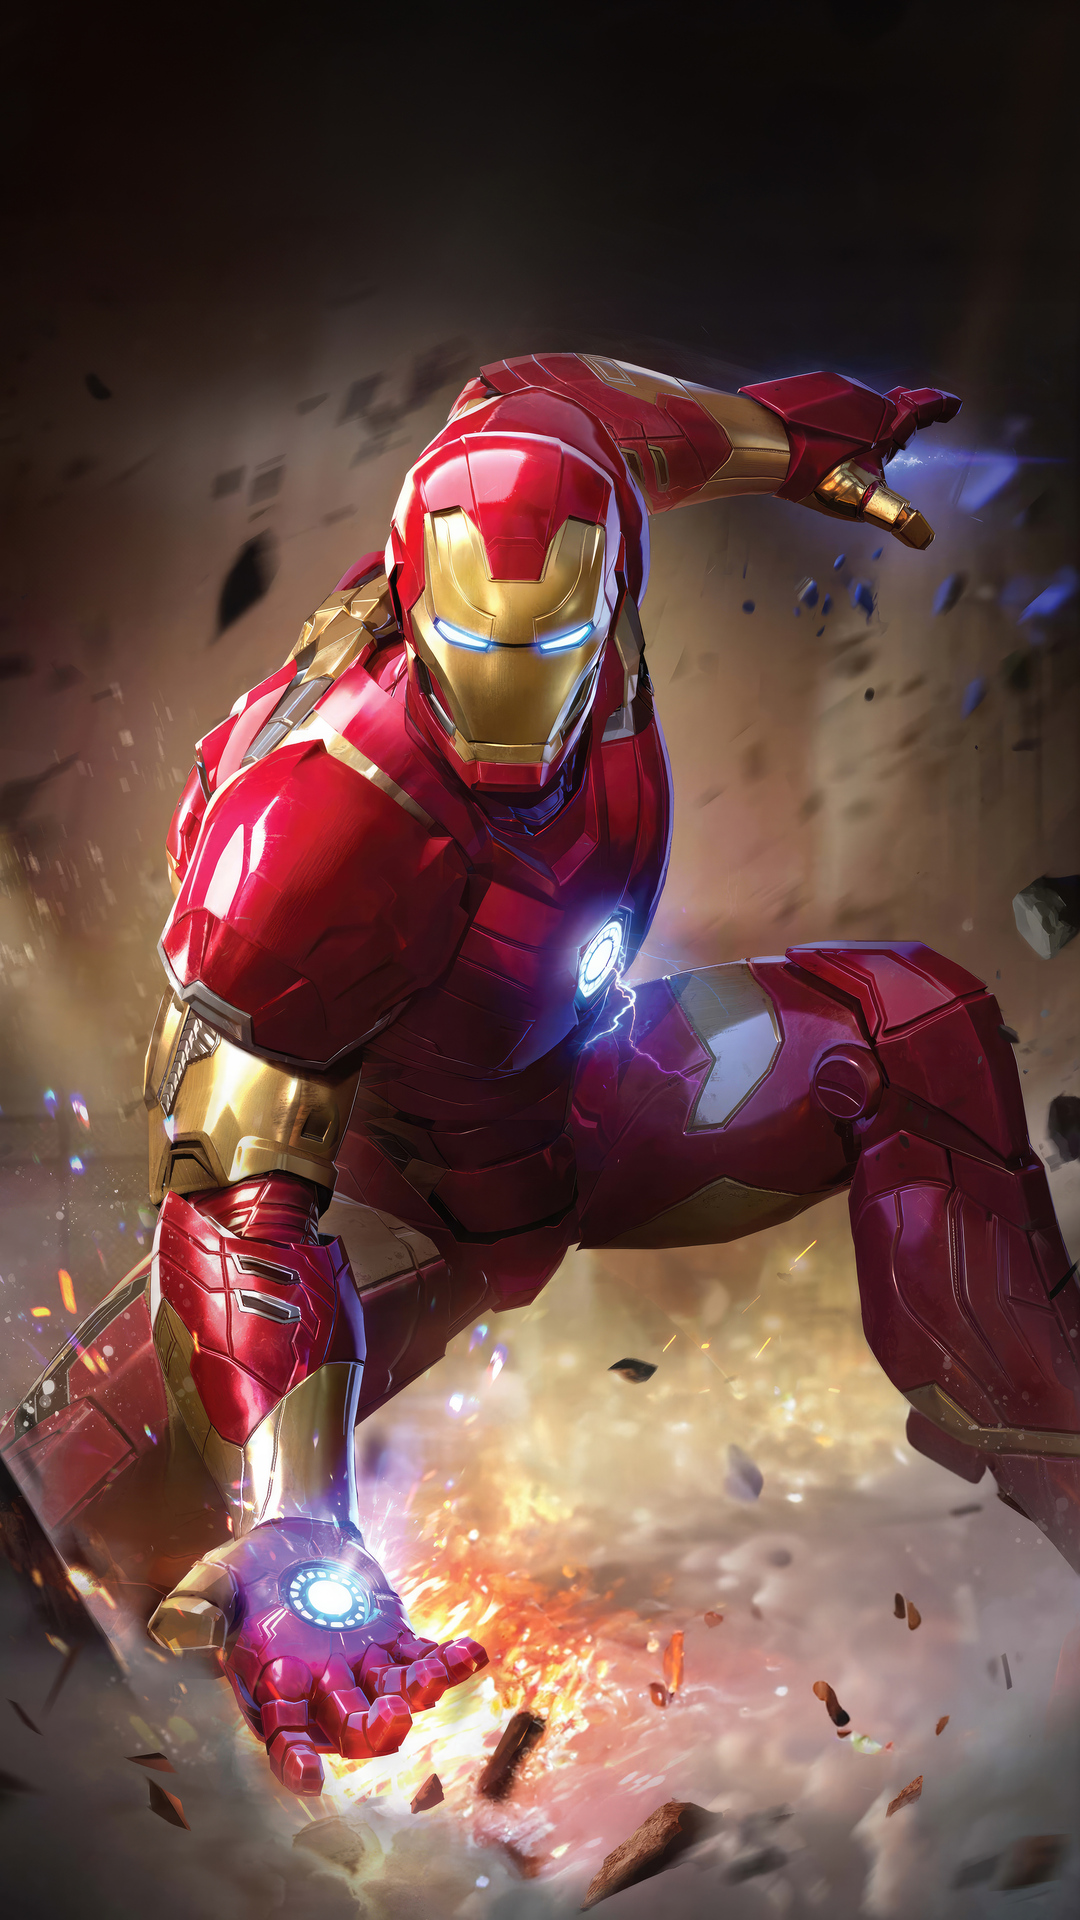 1080x1920 Marvel Duel Iron Man 4k Iphone 7,6s,6 Plus, Pixel xl ,One ...